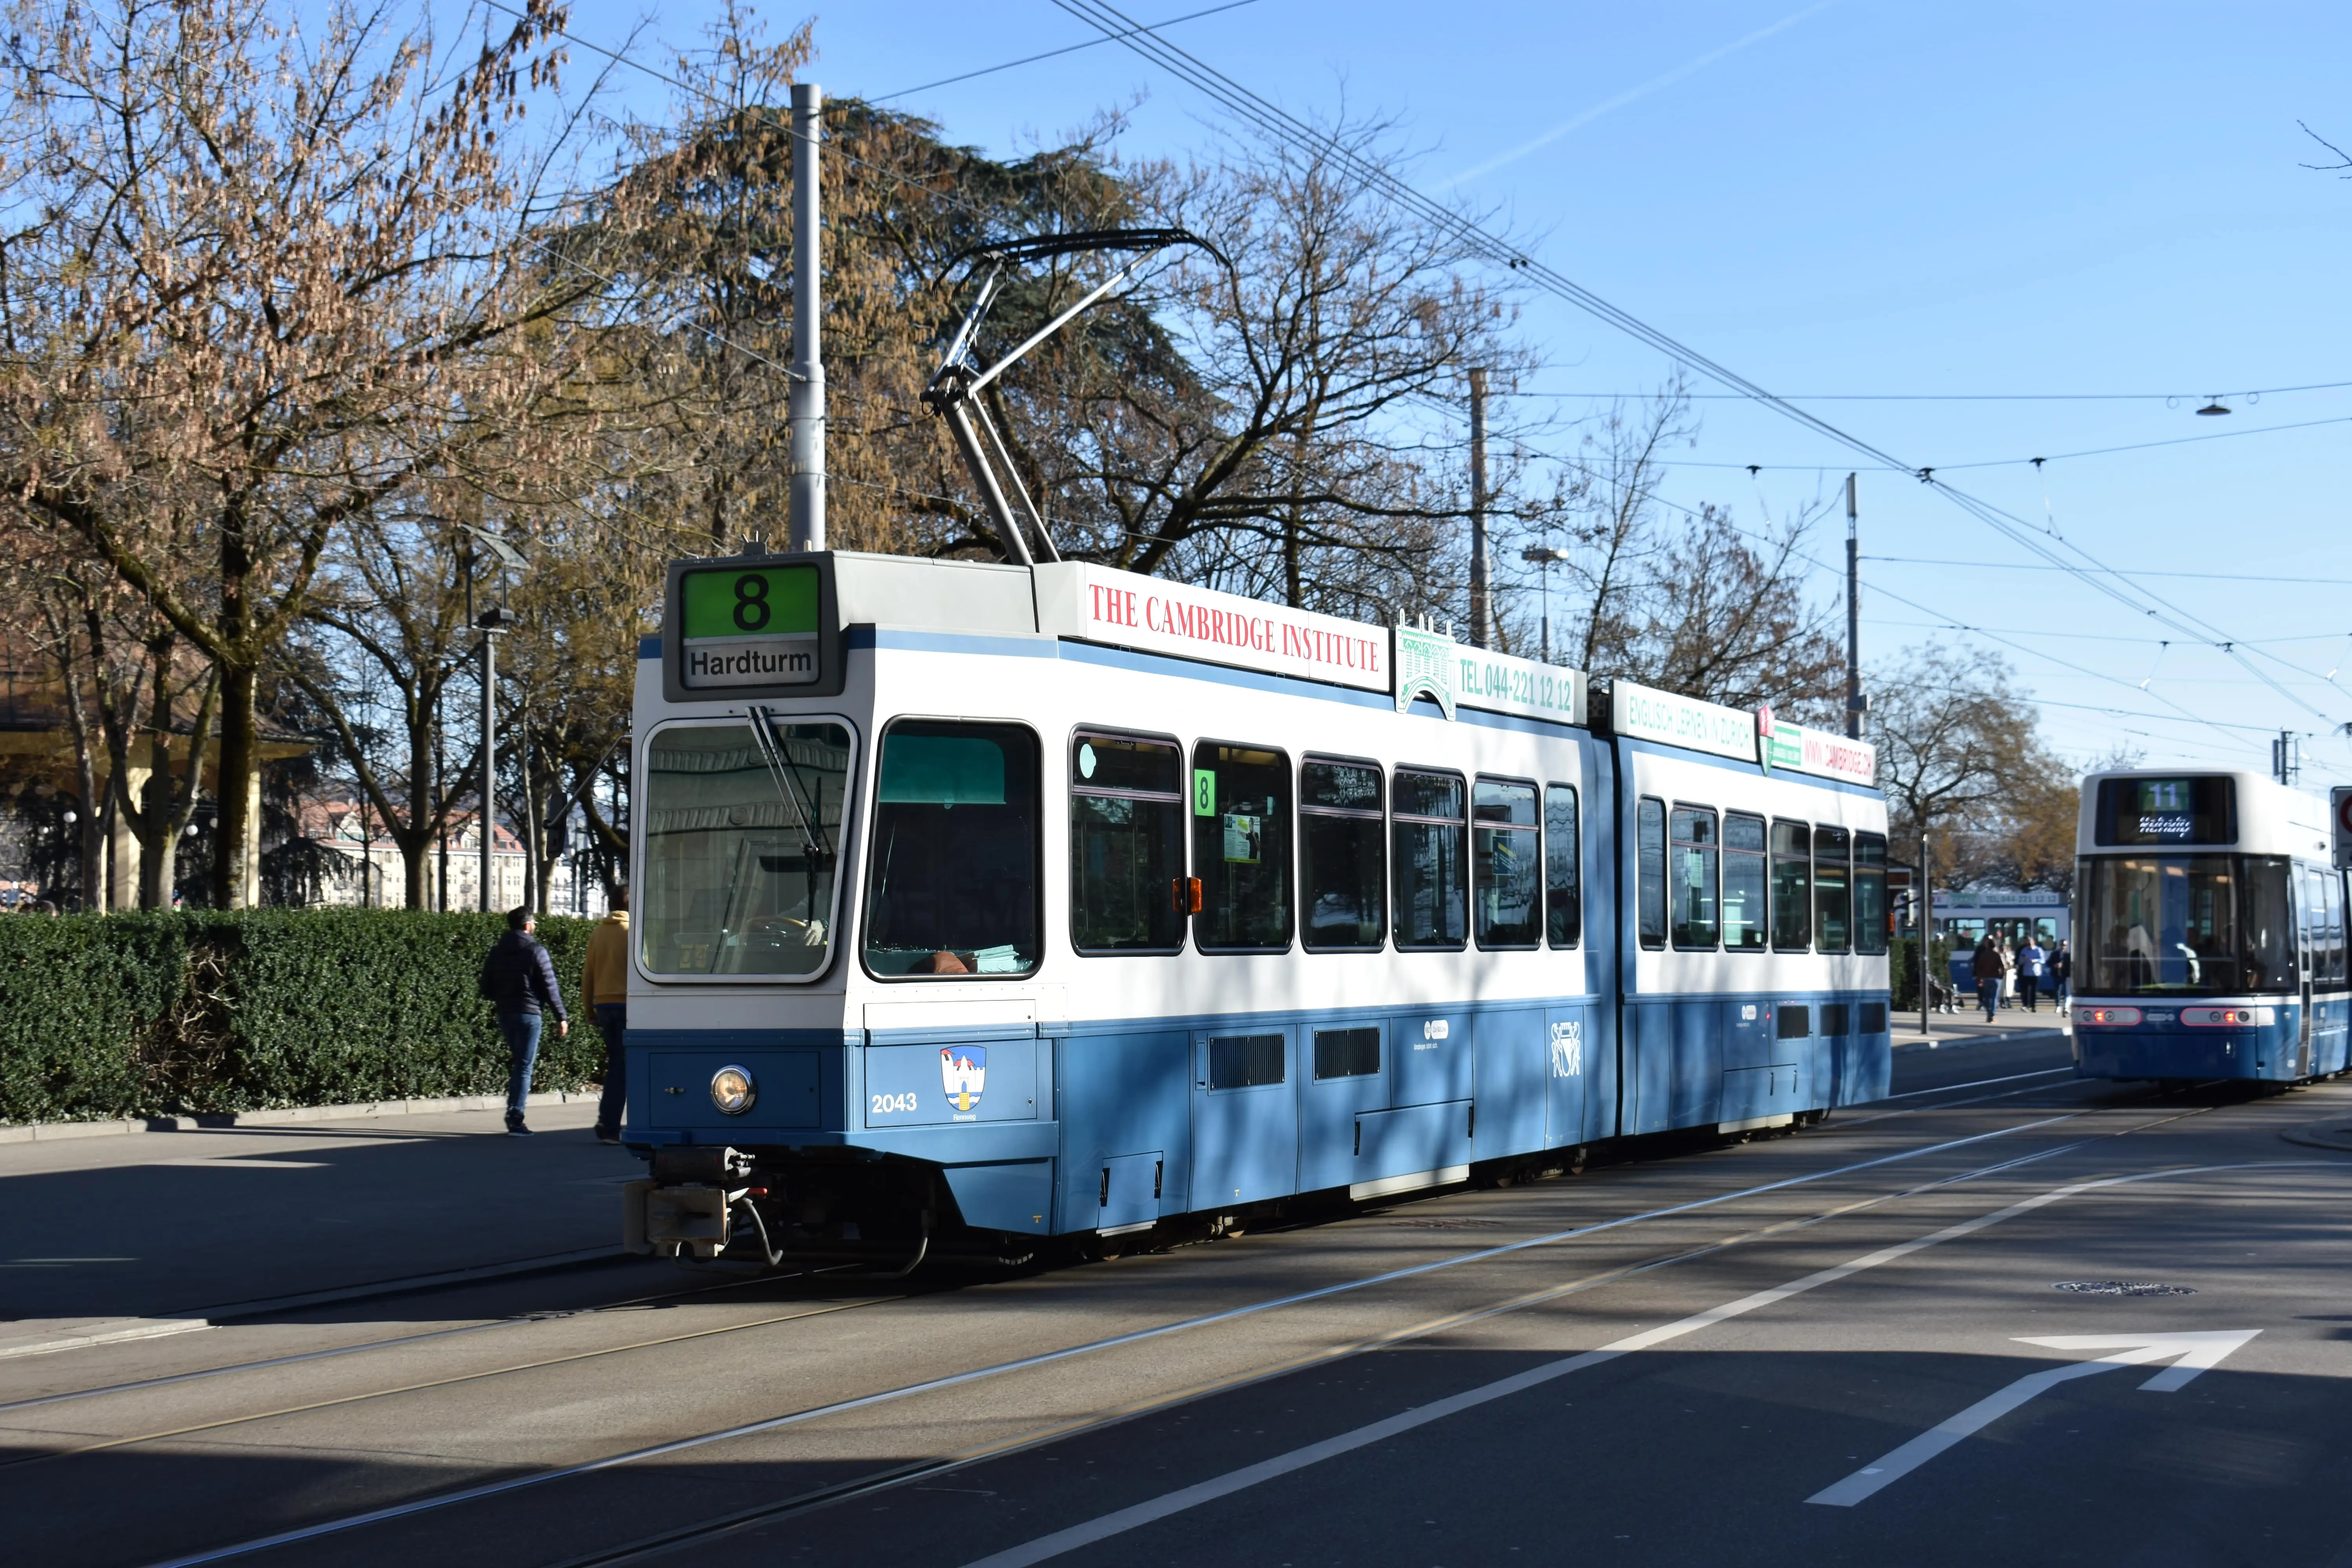 Zürich tram line 8 with articulated tram 2043 on Theaterstrasse